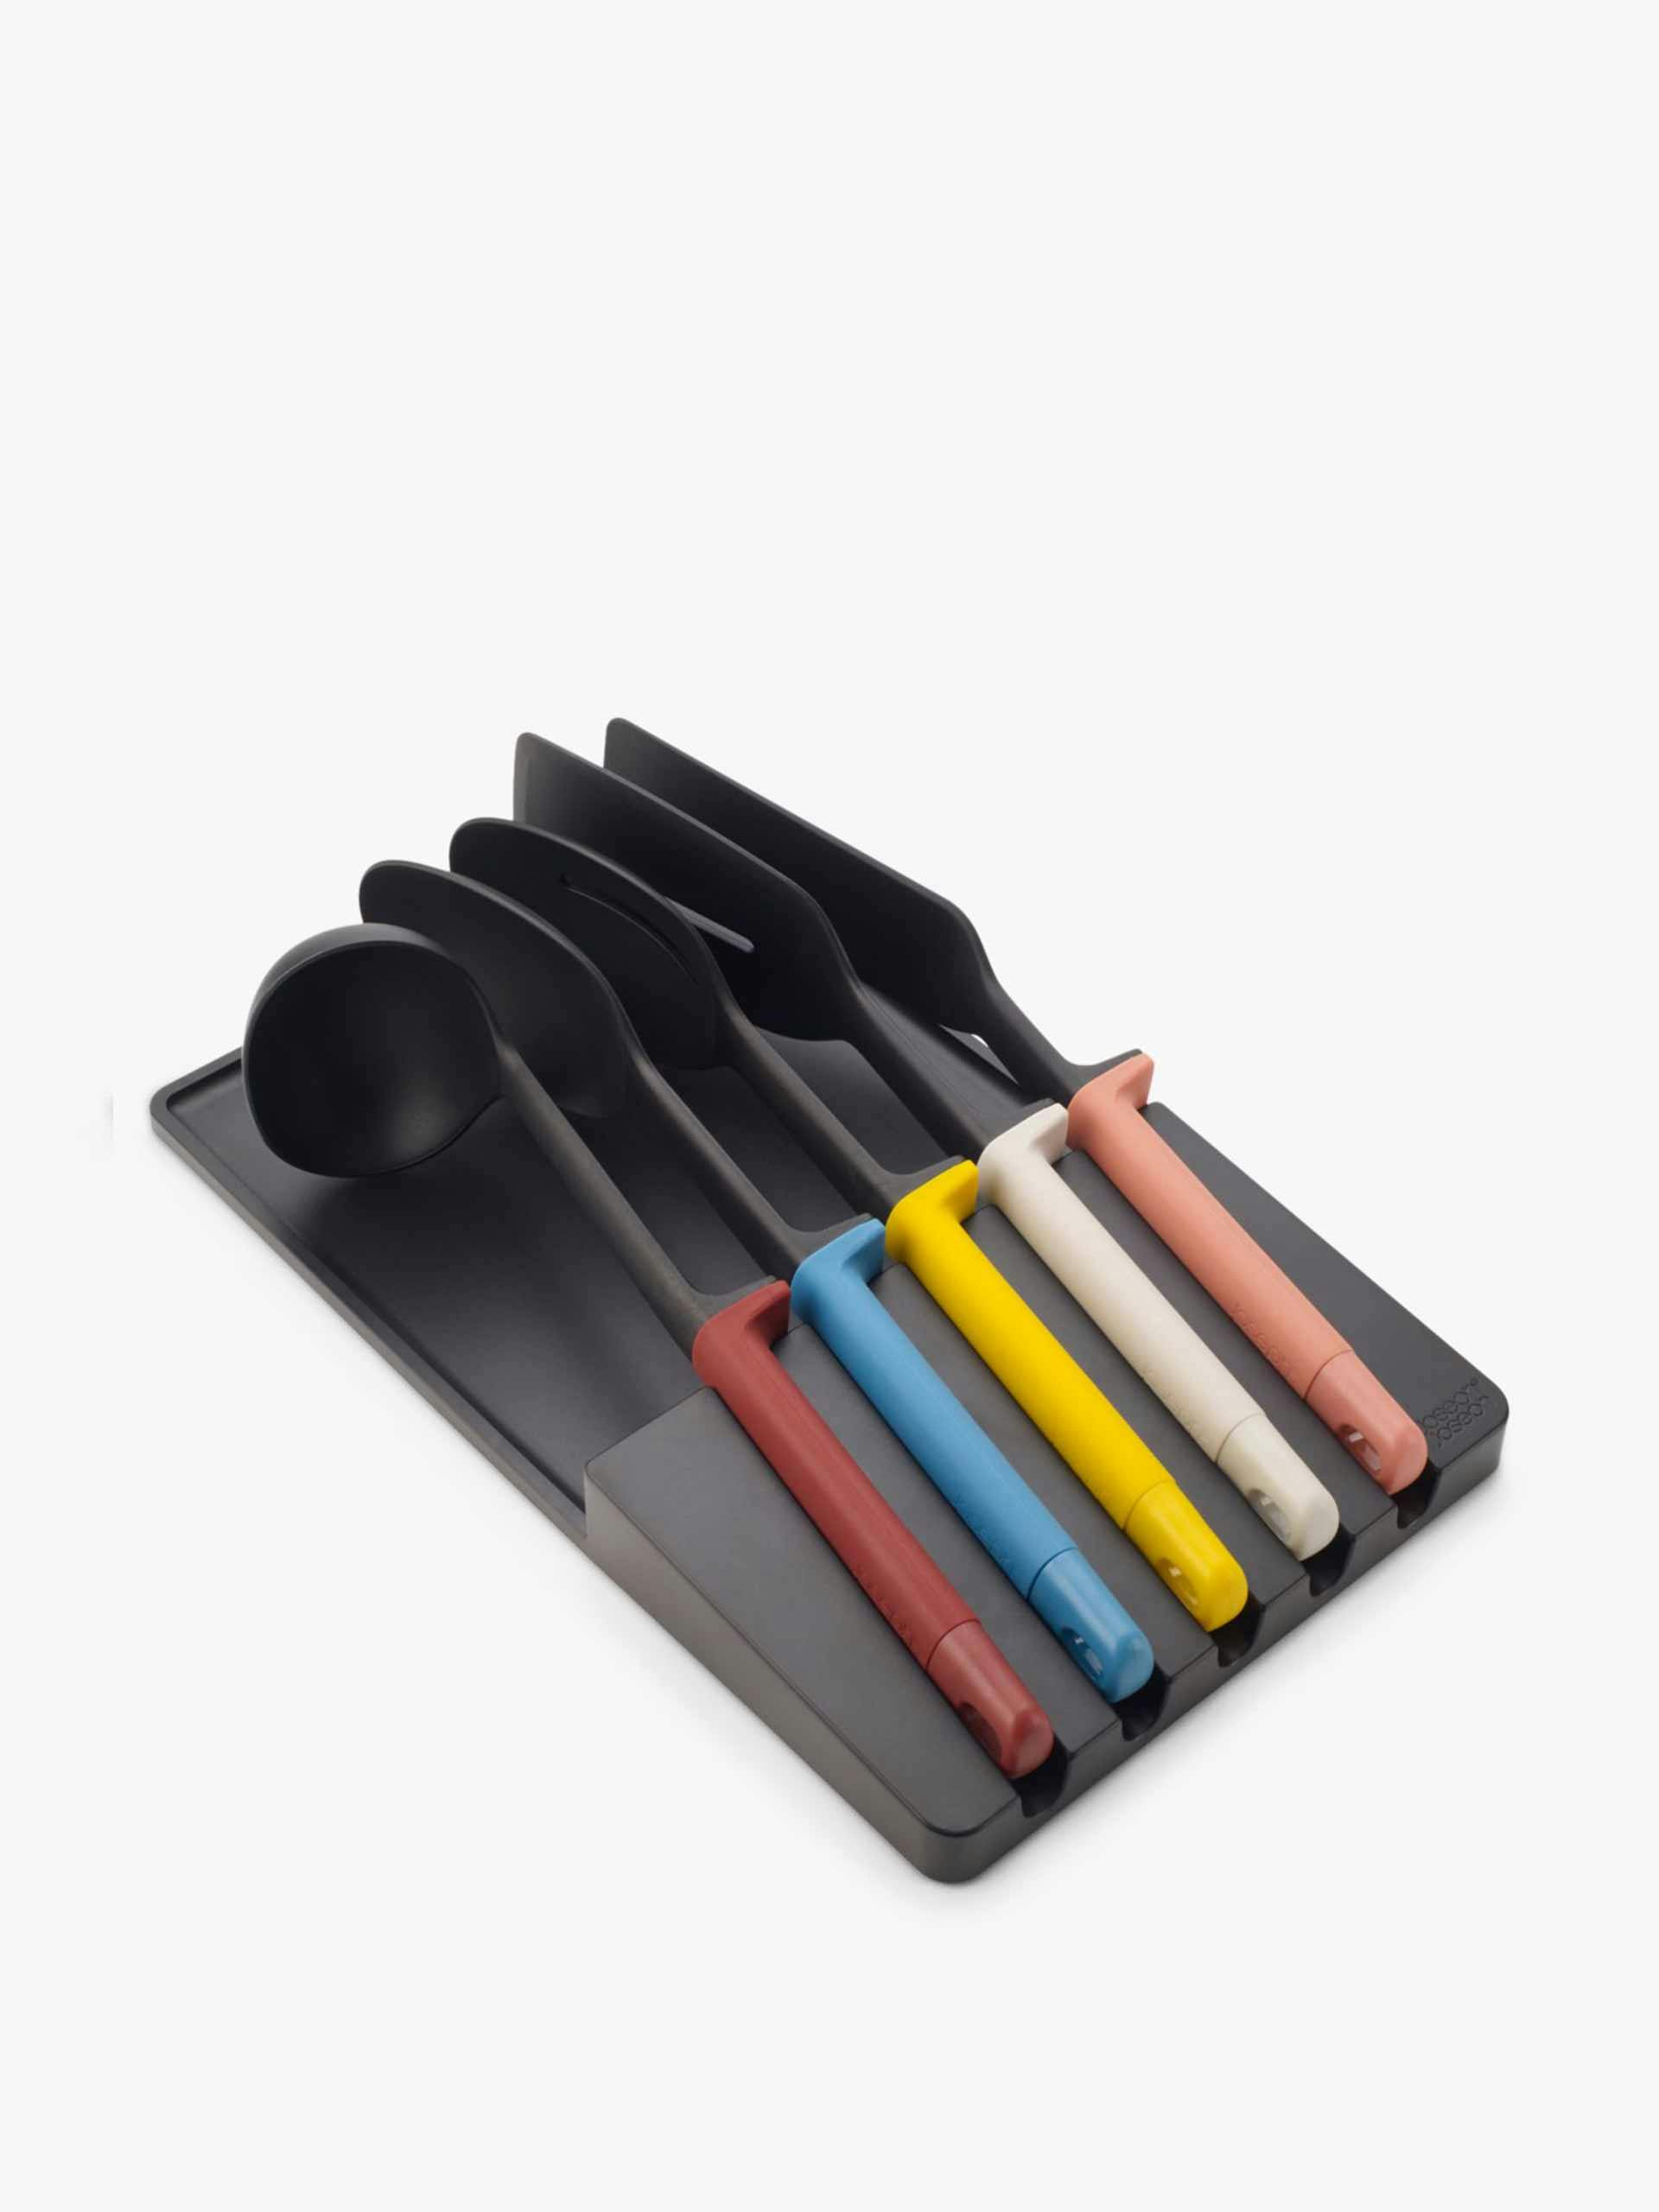 Kitchen utensils and in-draw storage tray